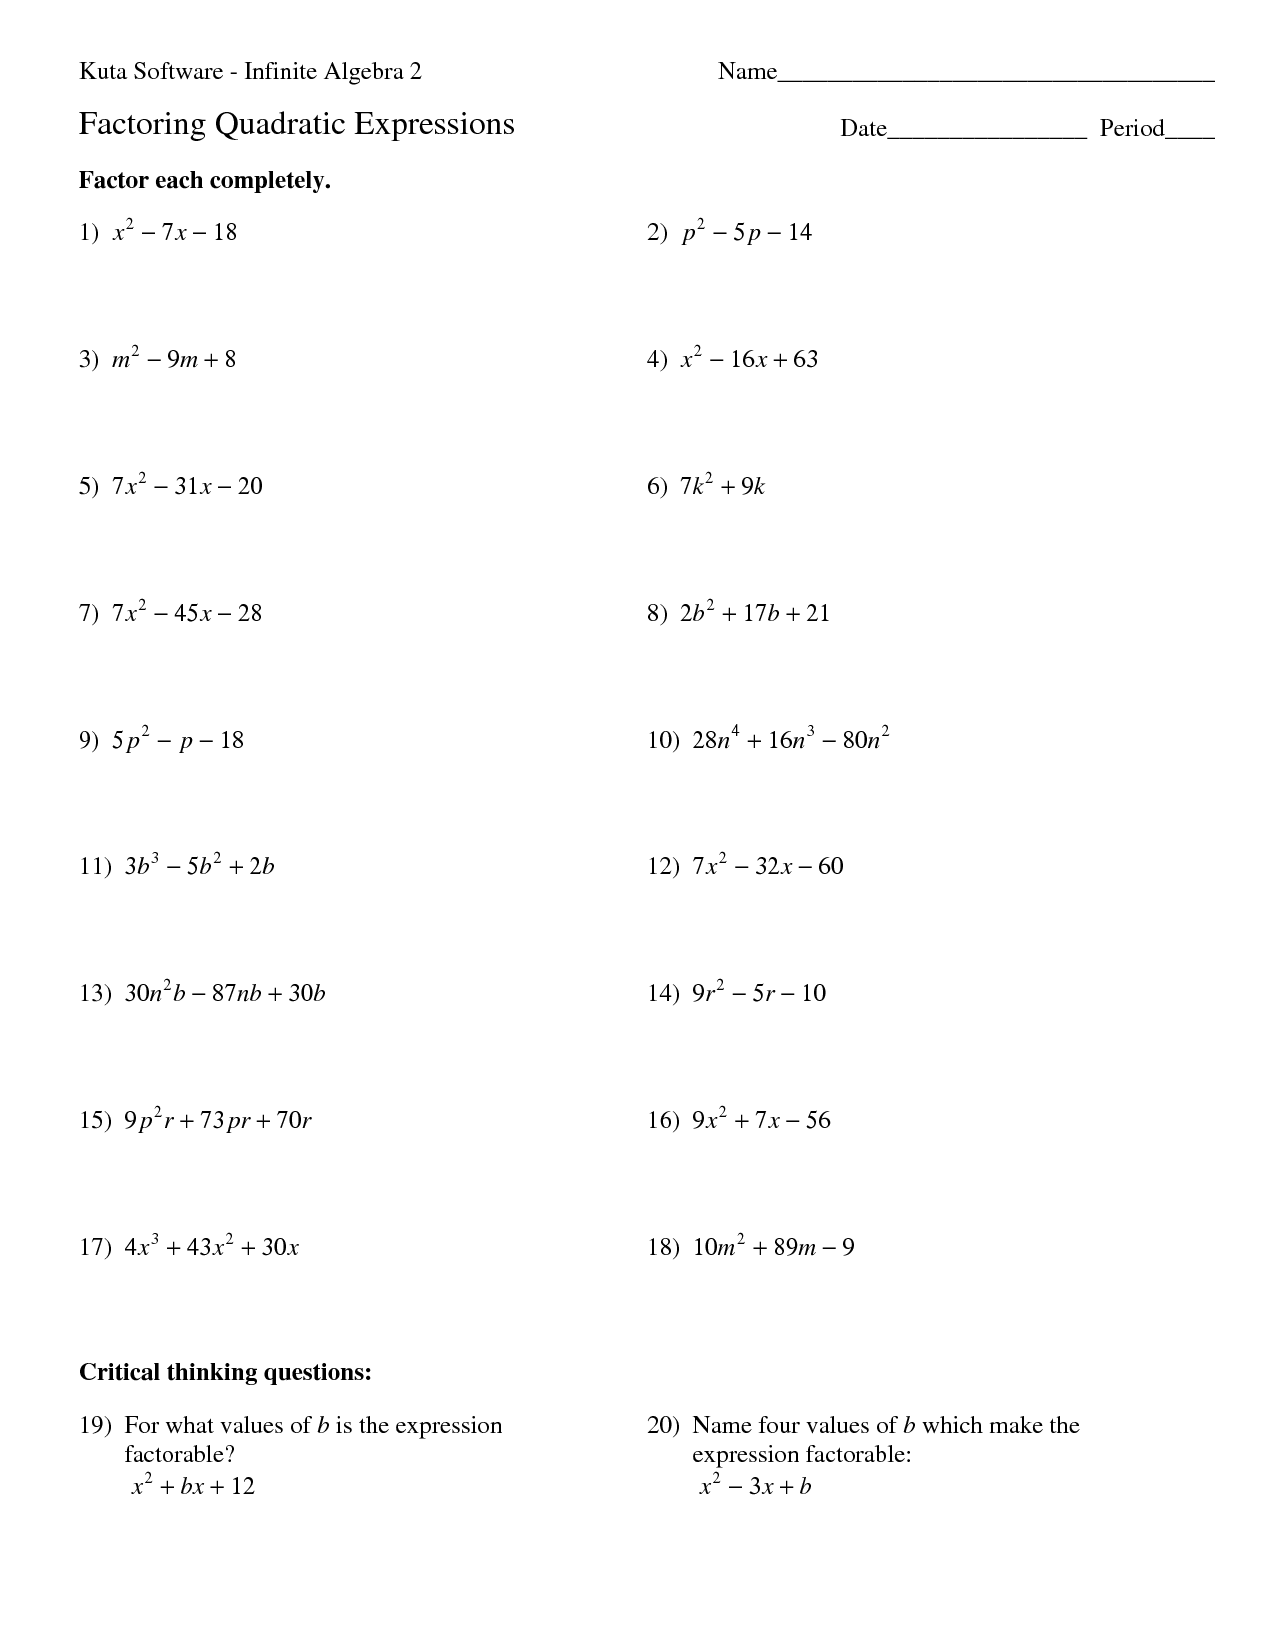 Factoring Quadratic Equations Worksheet Answers Image